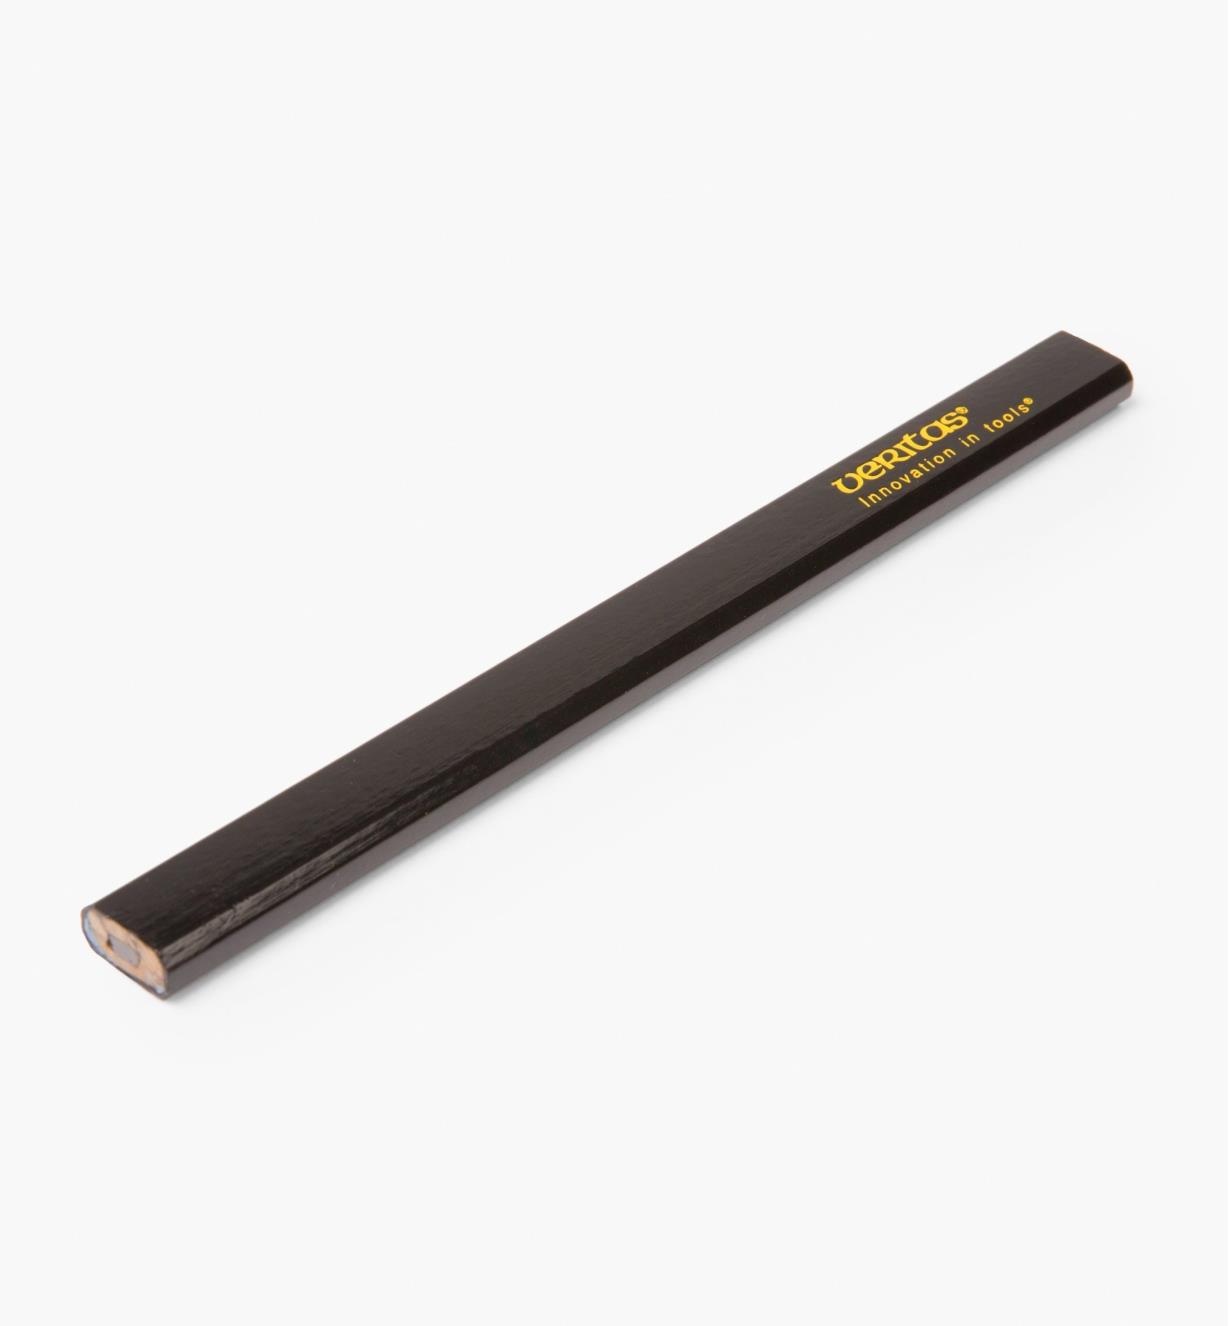 61N0513 - Veritas Carpenter's Pencil, each